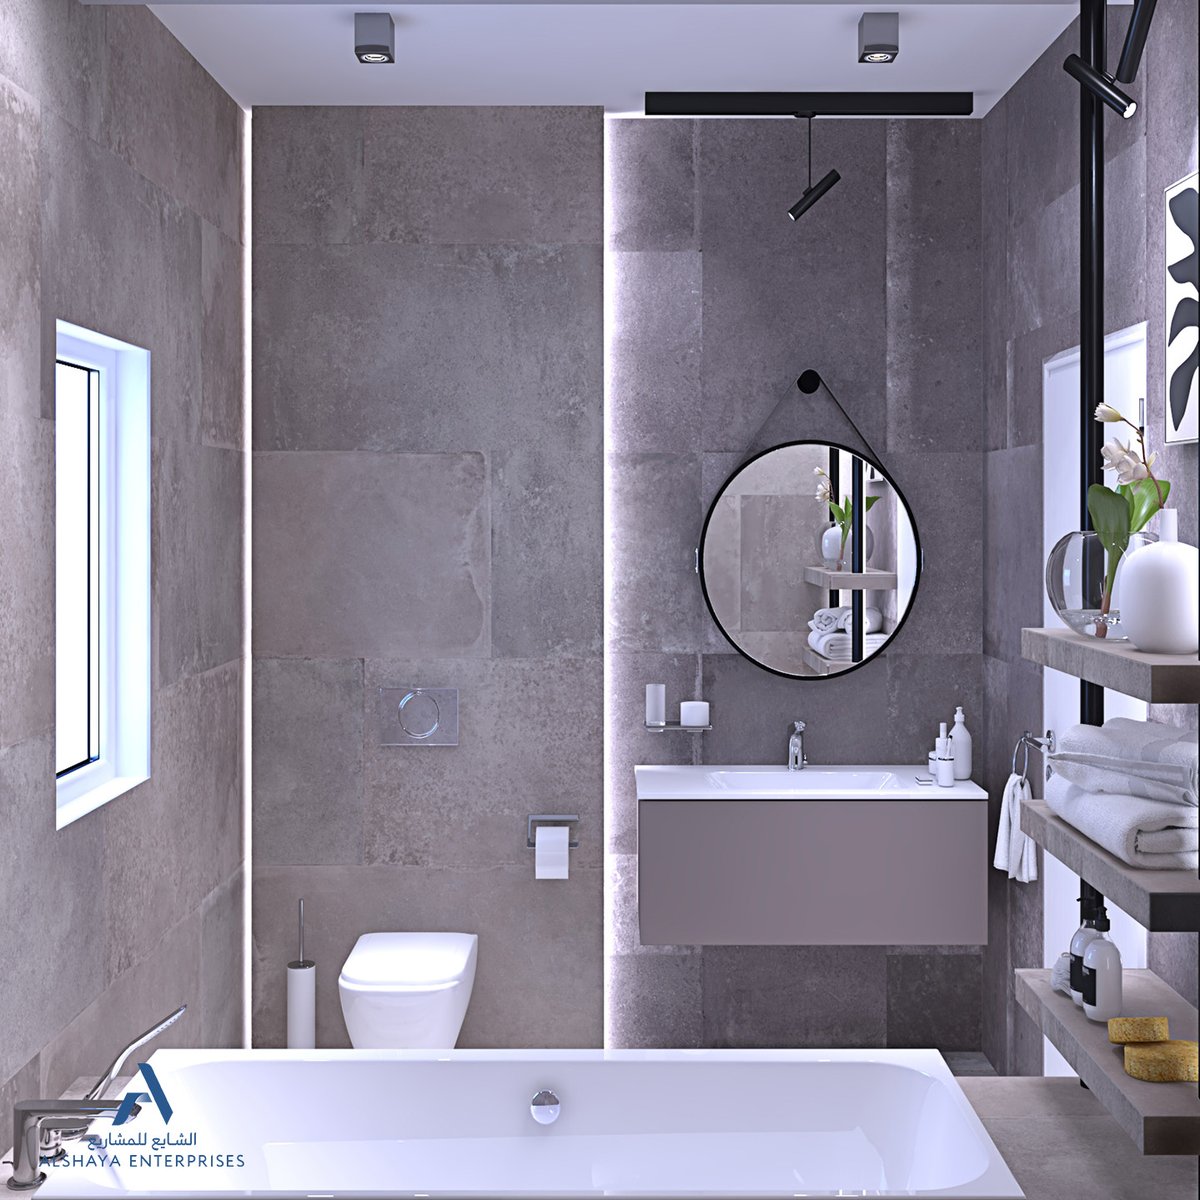 Alshayaenterprises On Twitter Bathroom Design By Our Professional Designers Team In Architect Design Center Division In Dammam